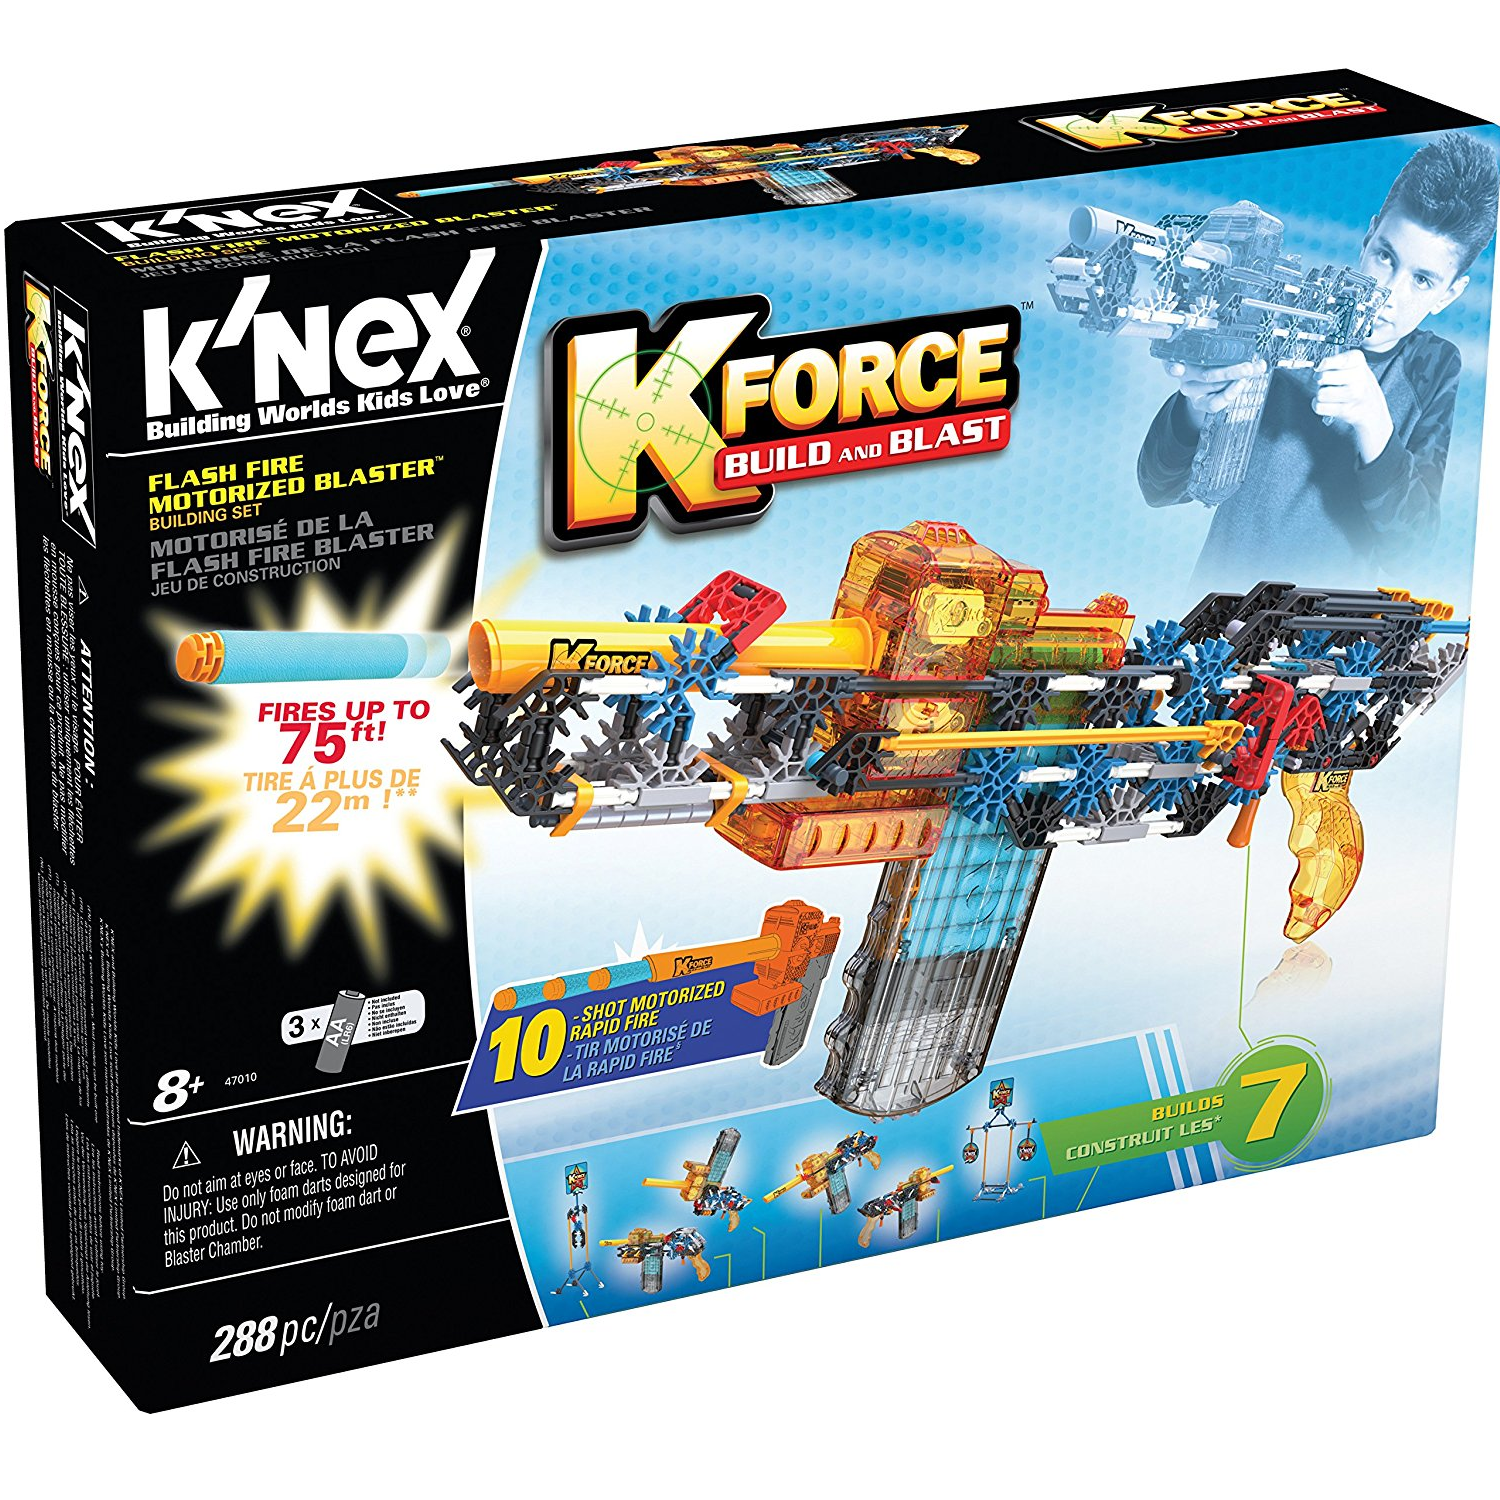 Save $20 Off The K’NEX K-Force Flash Fire Motorized Blaster Building Set – Only $28.99!